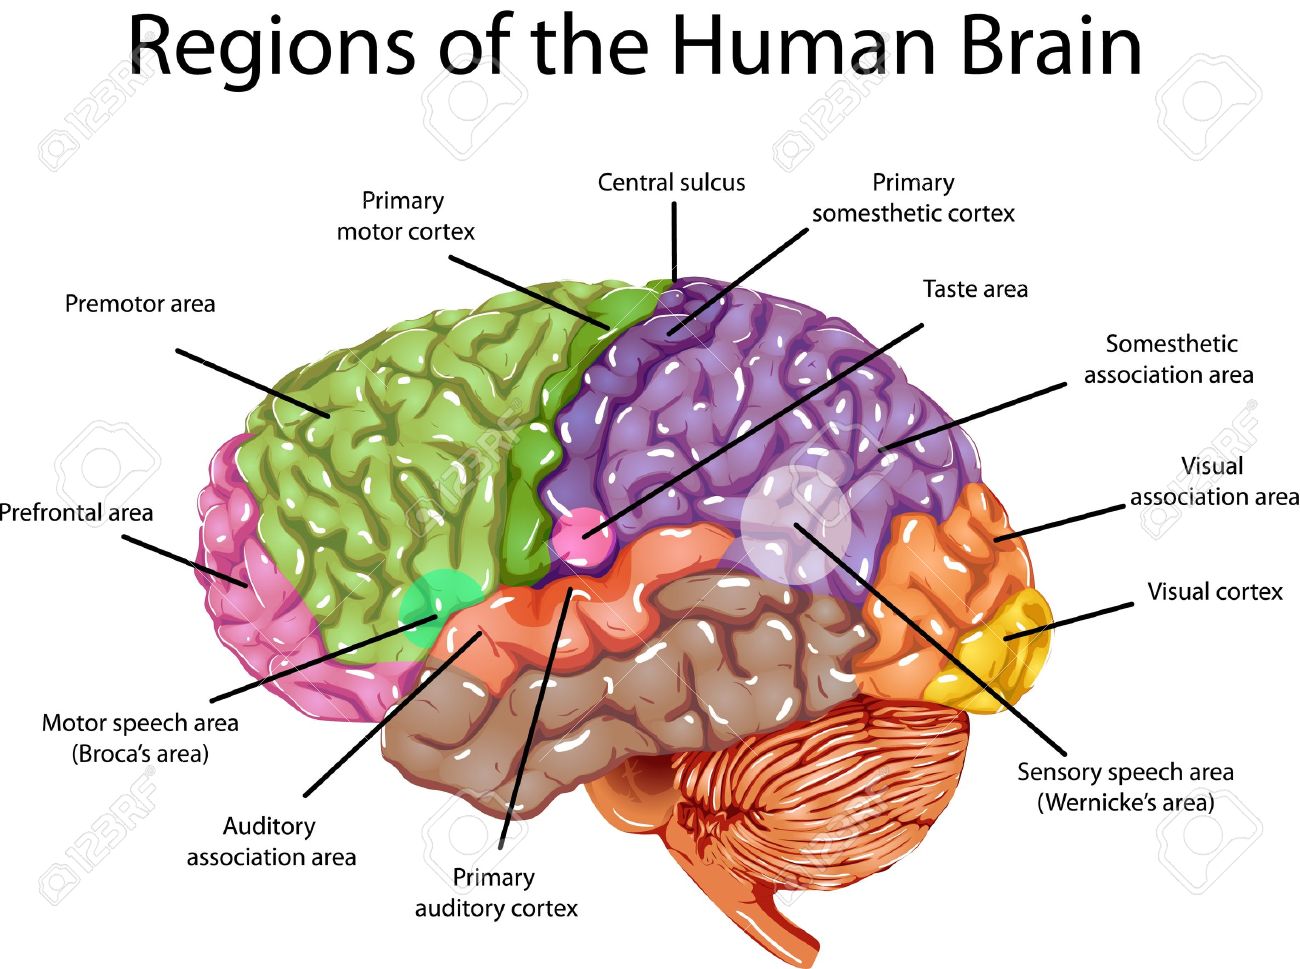 13699569-human-brain-regions-illustration-of-regions-in-human-brain-.jpg